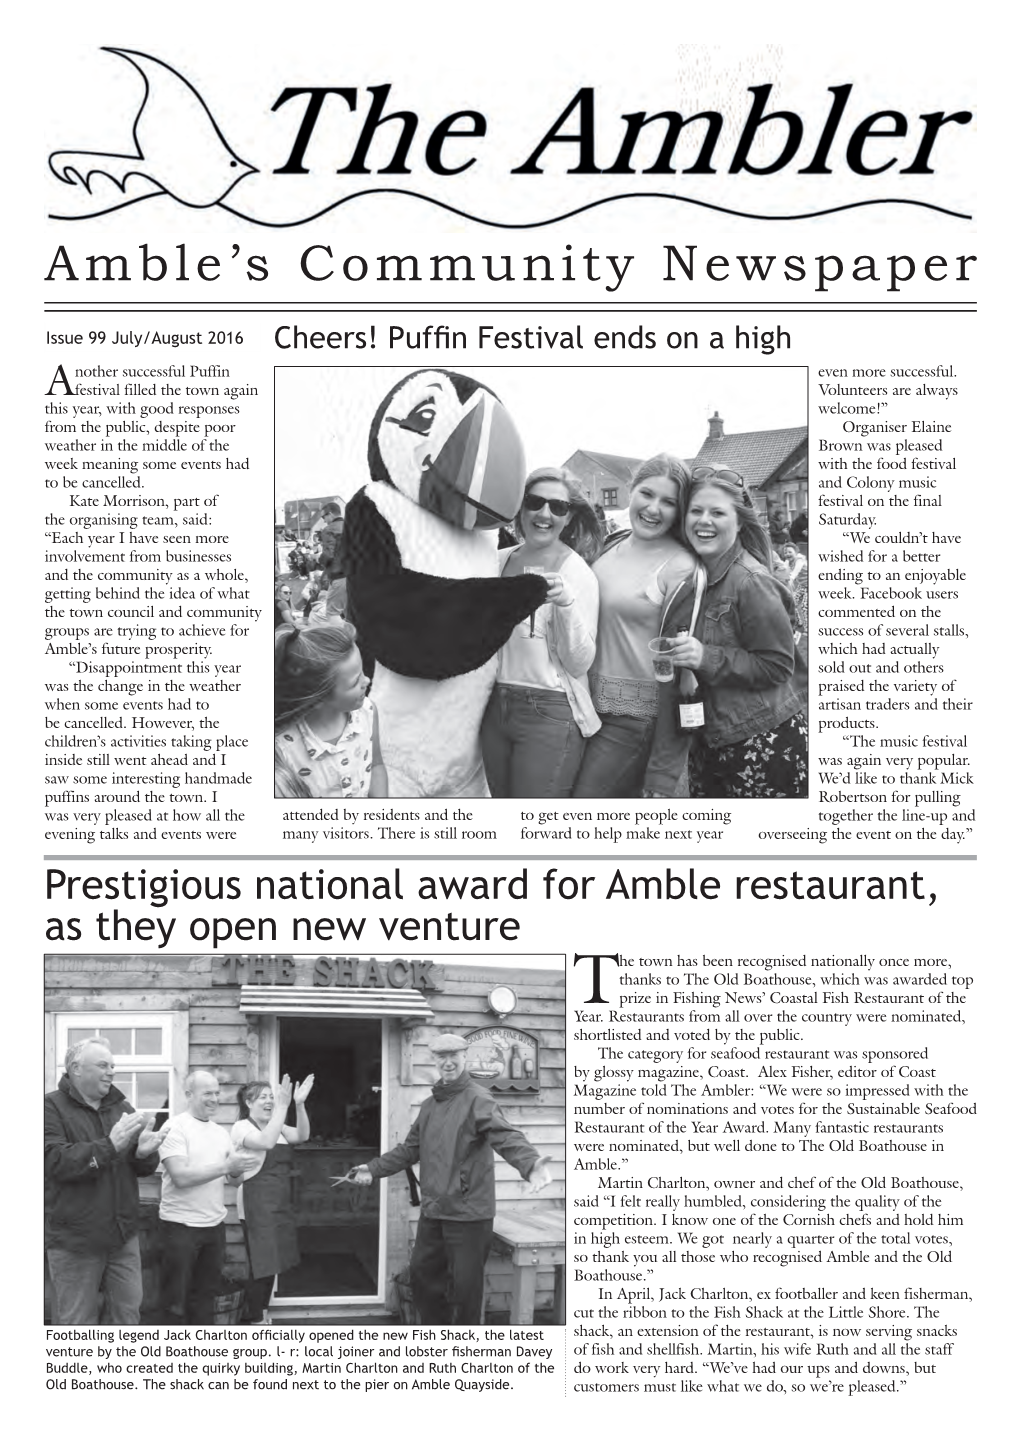 Prestigious National Award for Amble Restaurant, As They Open New Venture